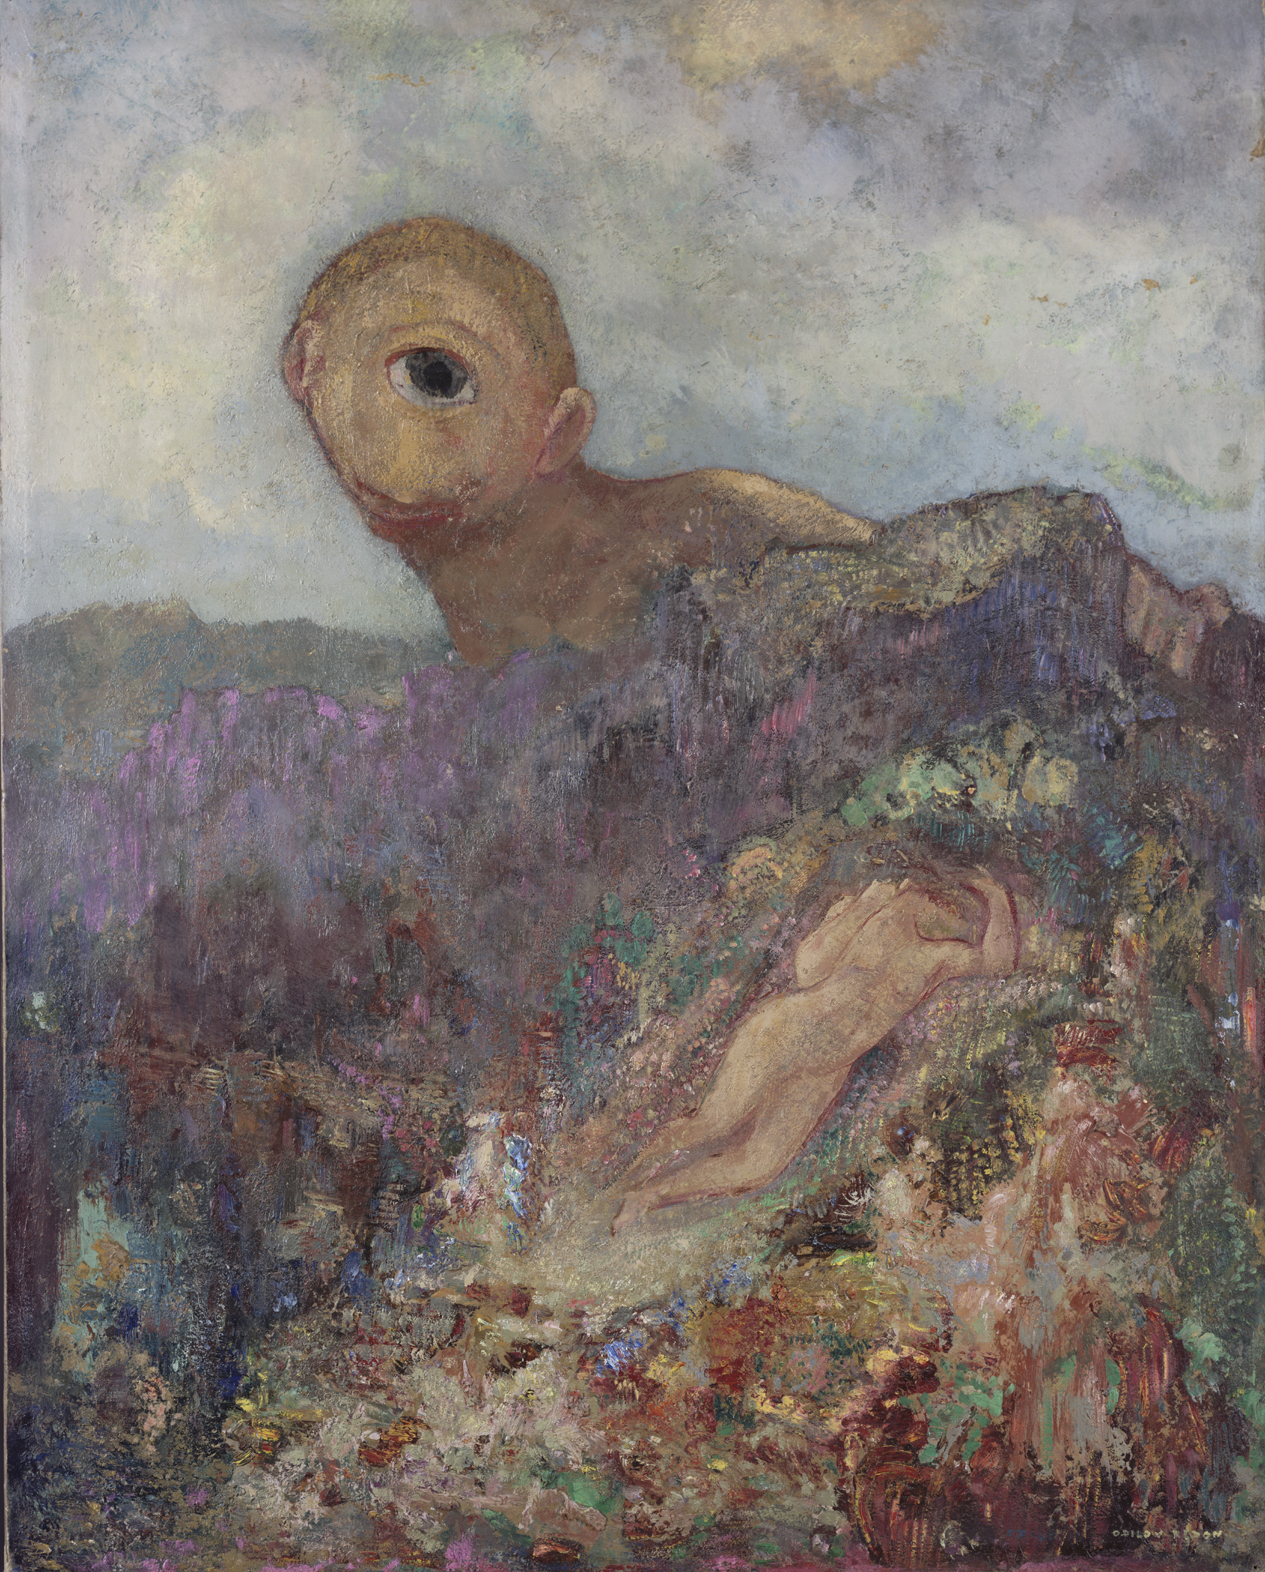 Циклоп by Odilon Redon - близько 1914 